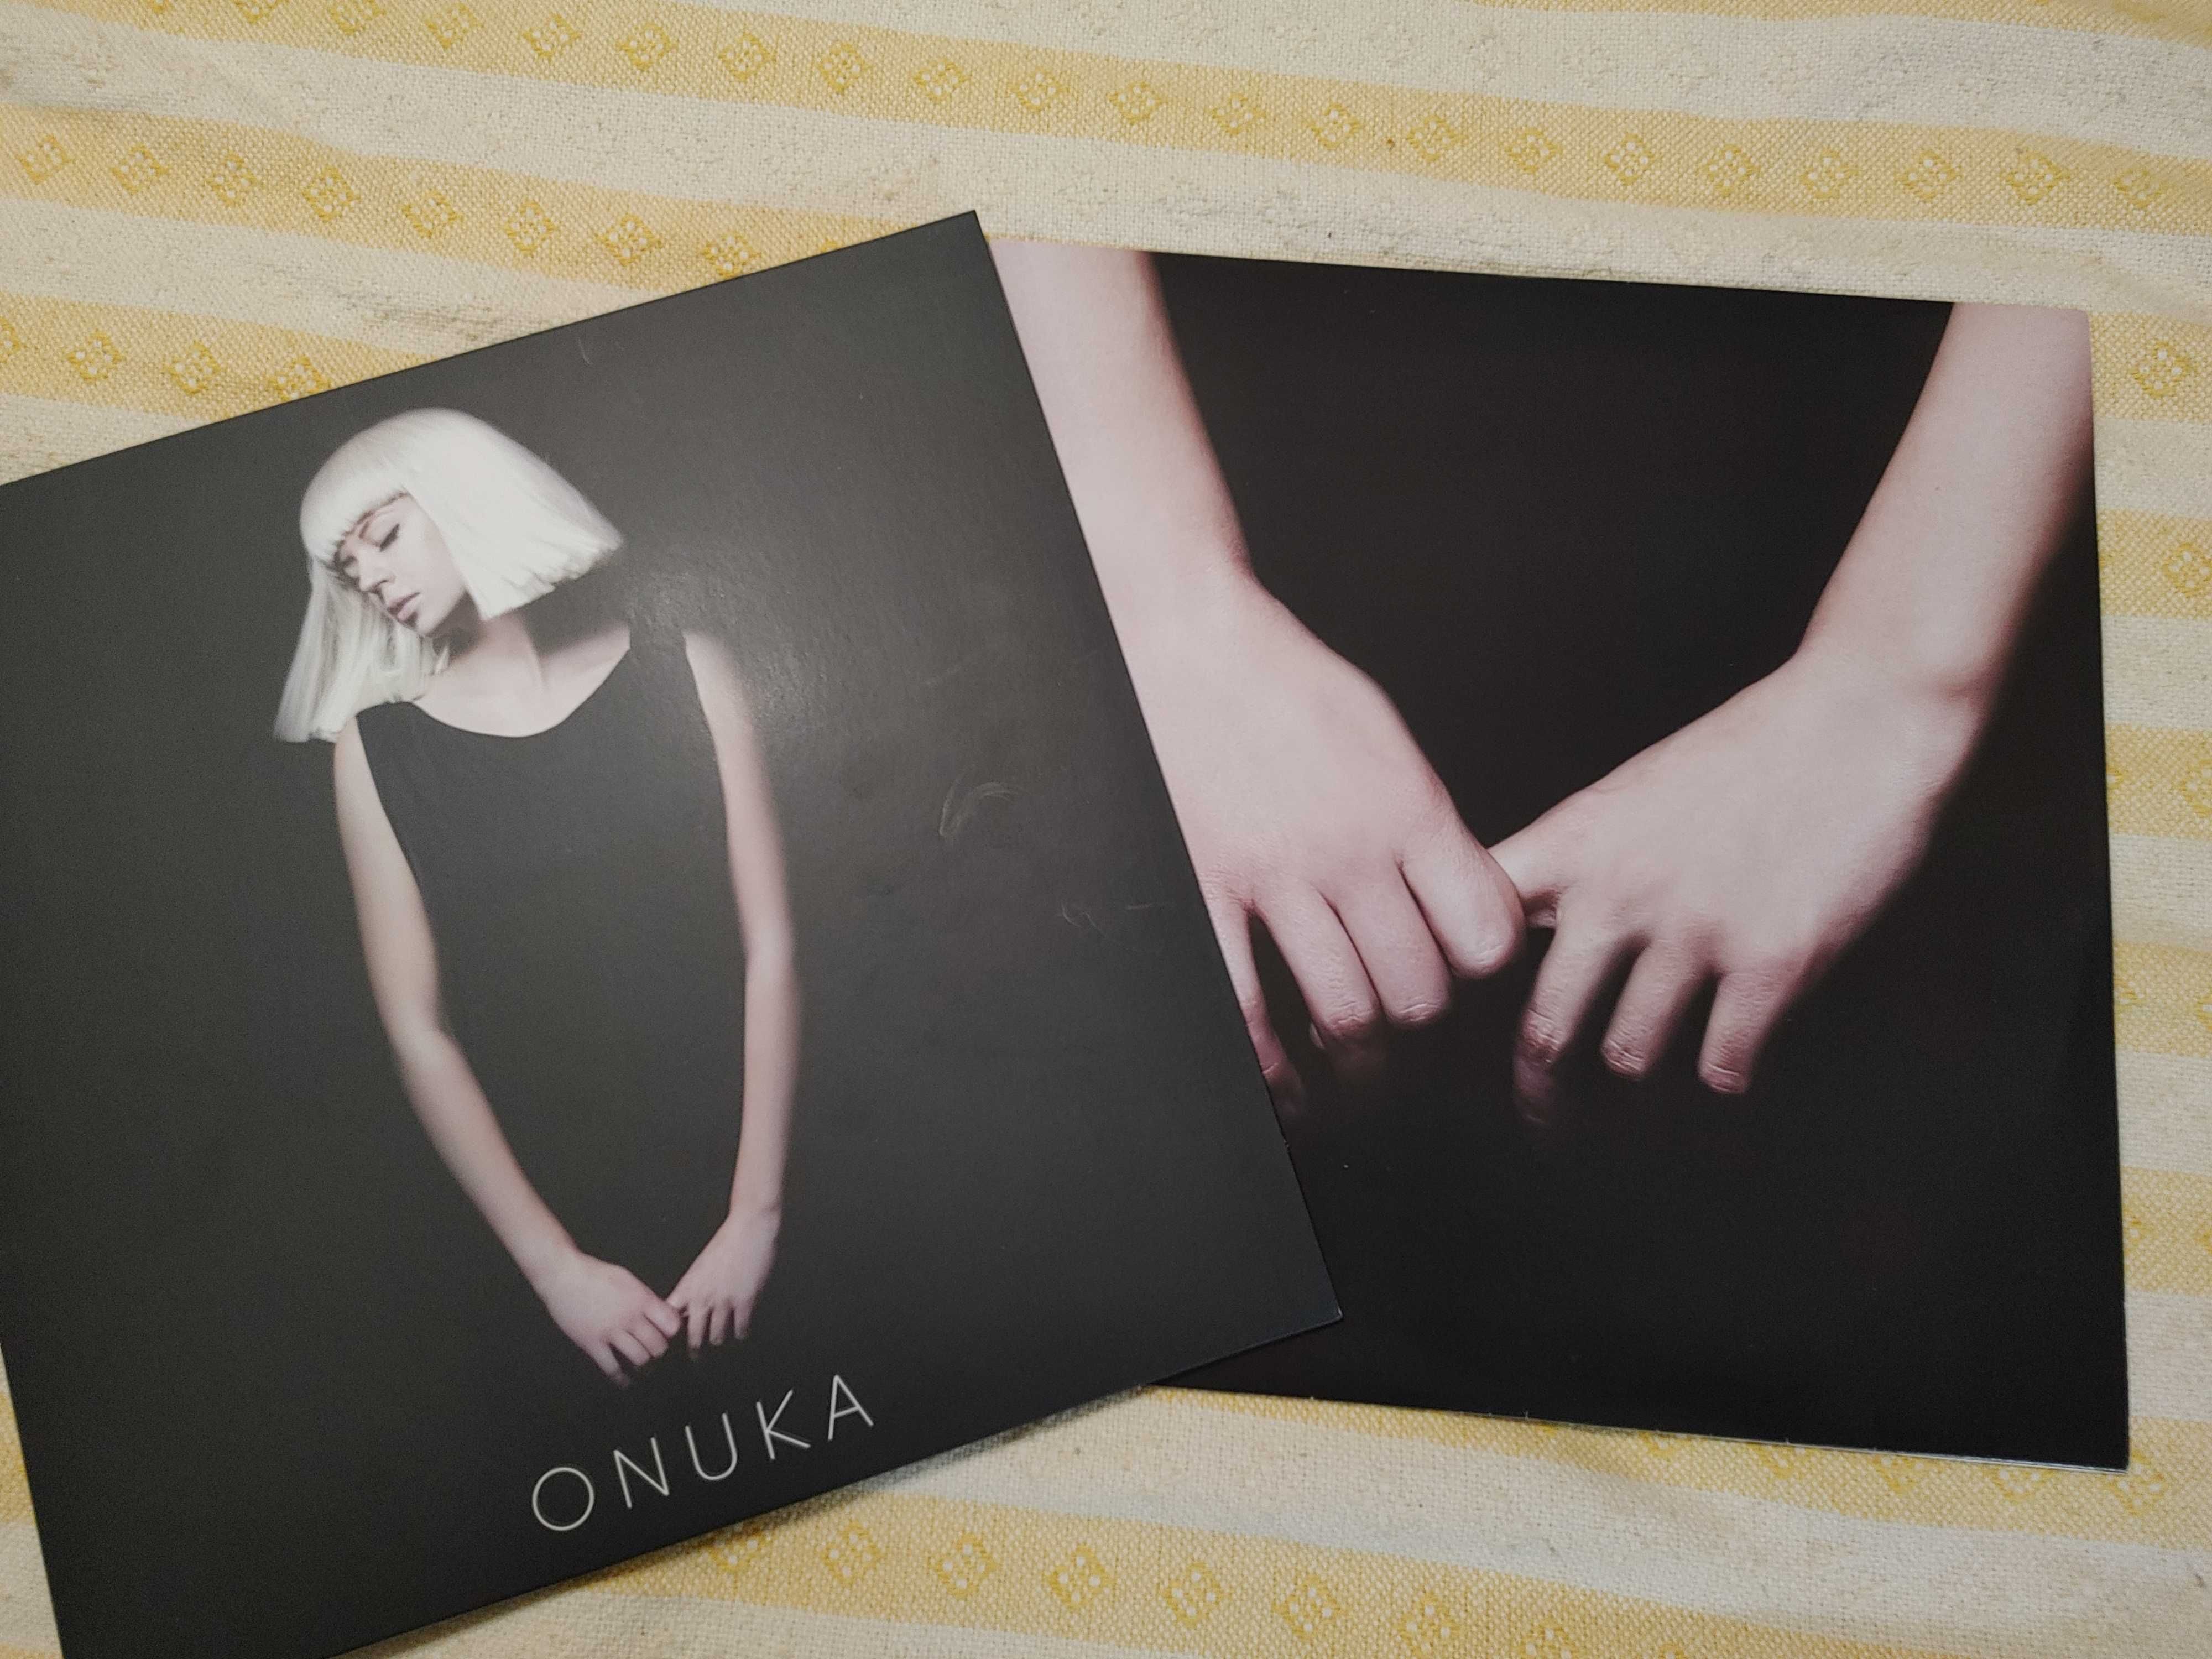 Onuka Vinyl, LP, Album, Limited Edition, Brown Translucent Marbled